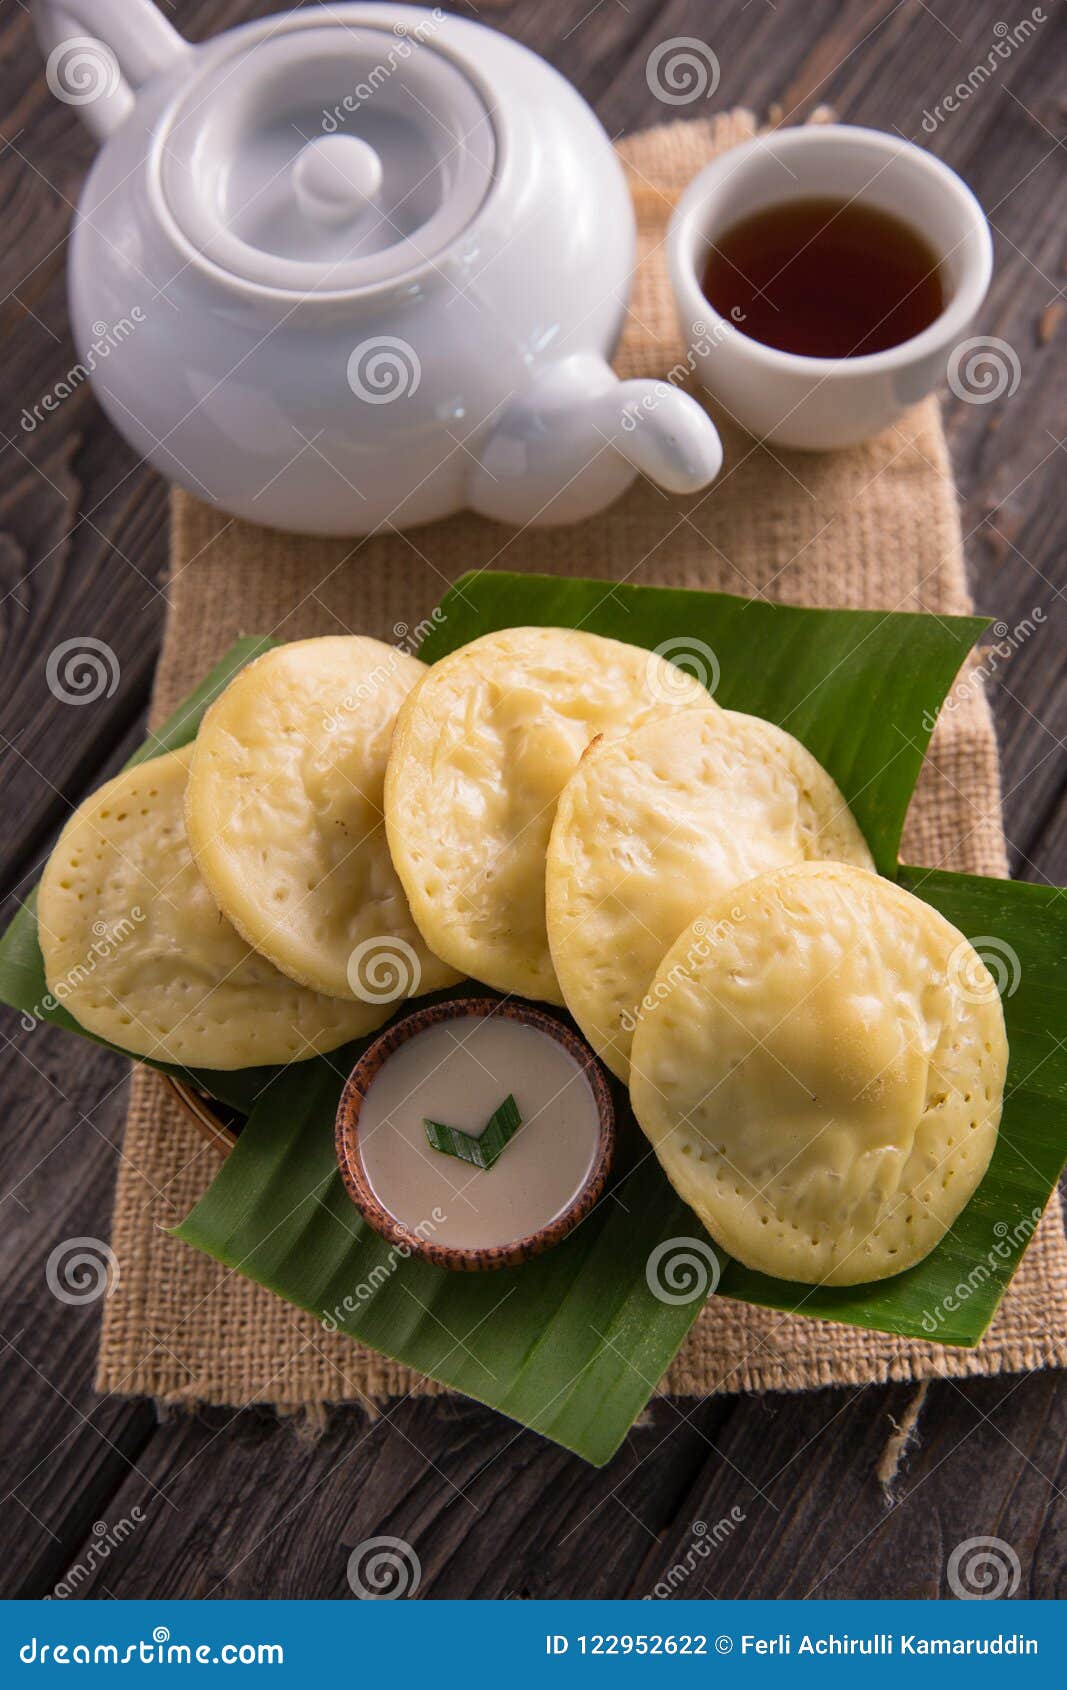 Serabi indonesian pancake  stock photo Image of meal 